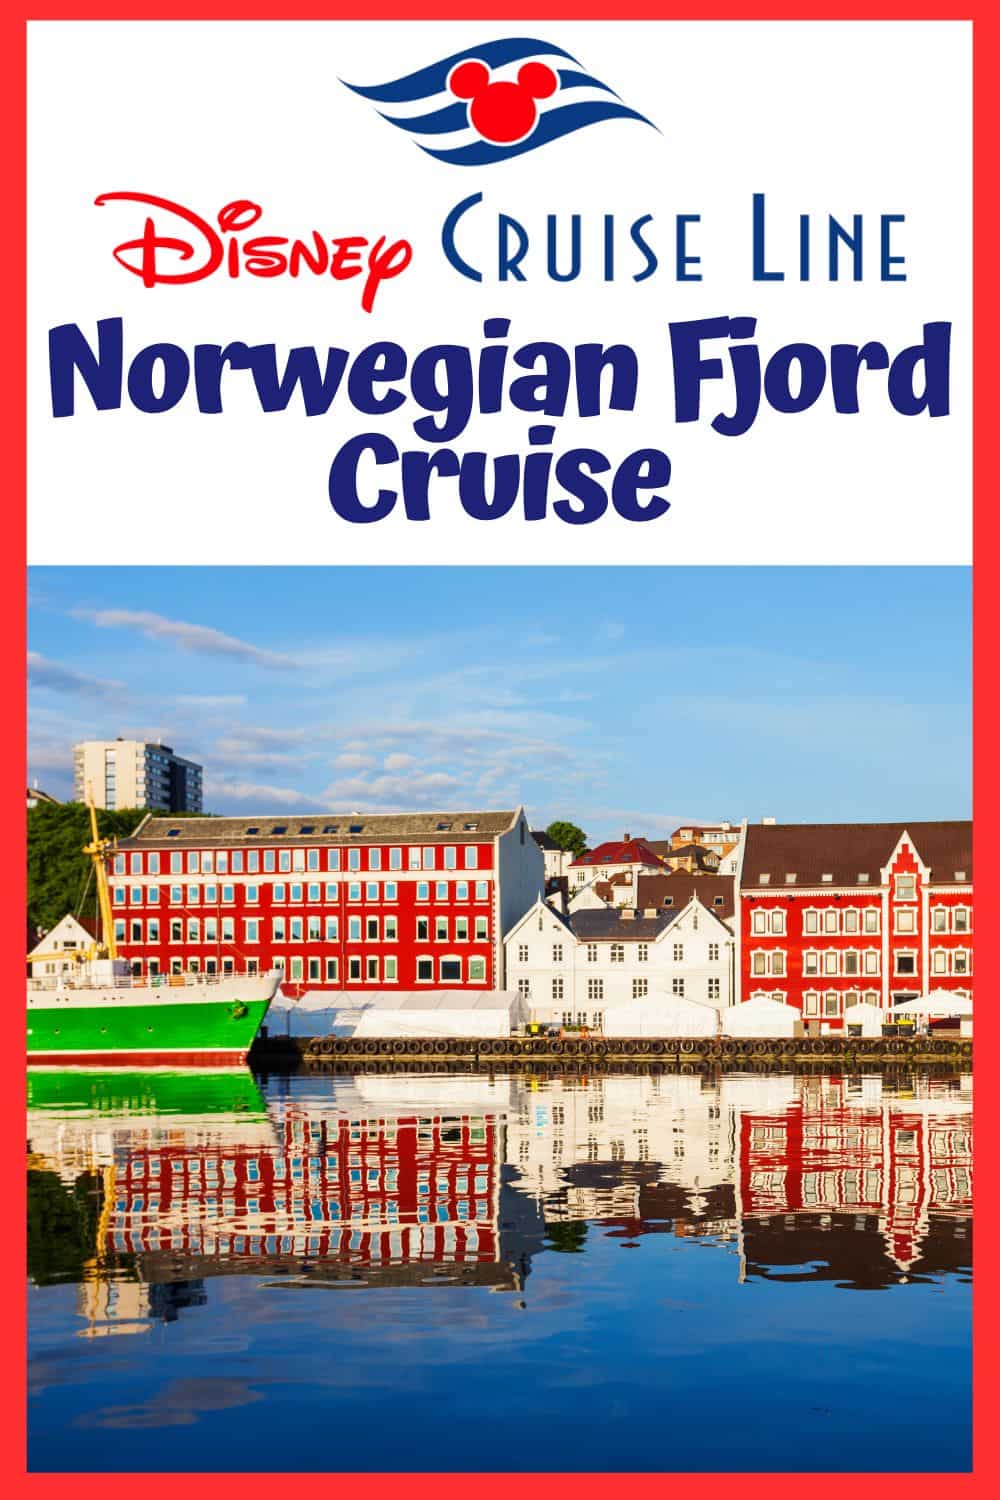 Disney Cruise to Norway